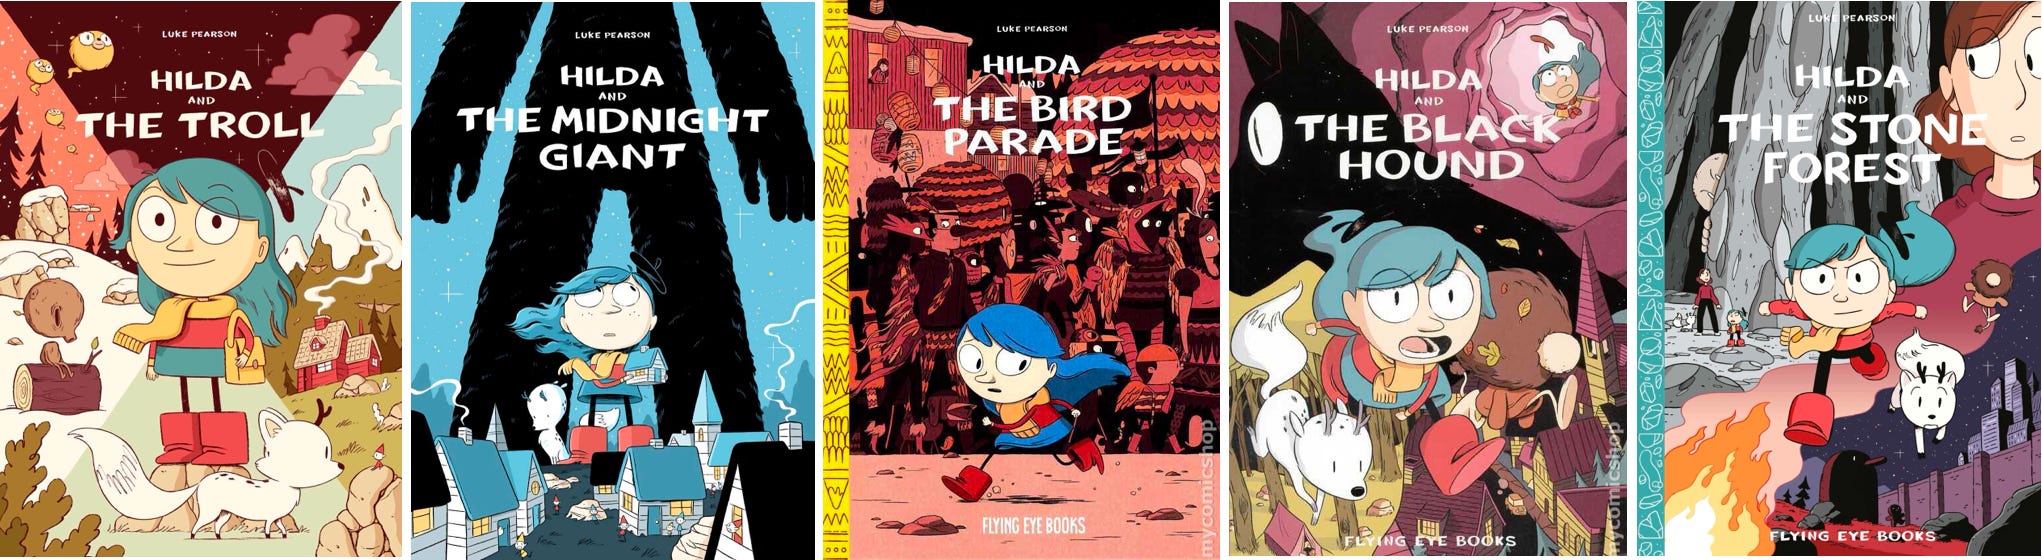 Hilda book covers